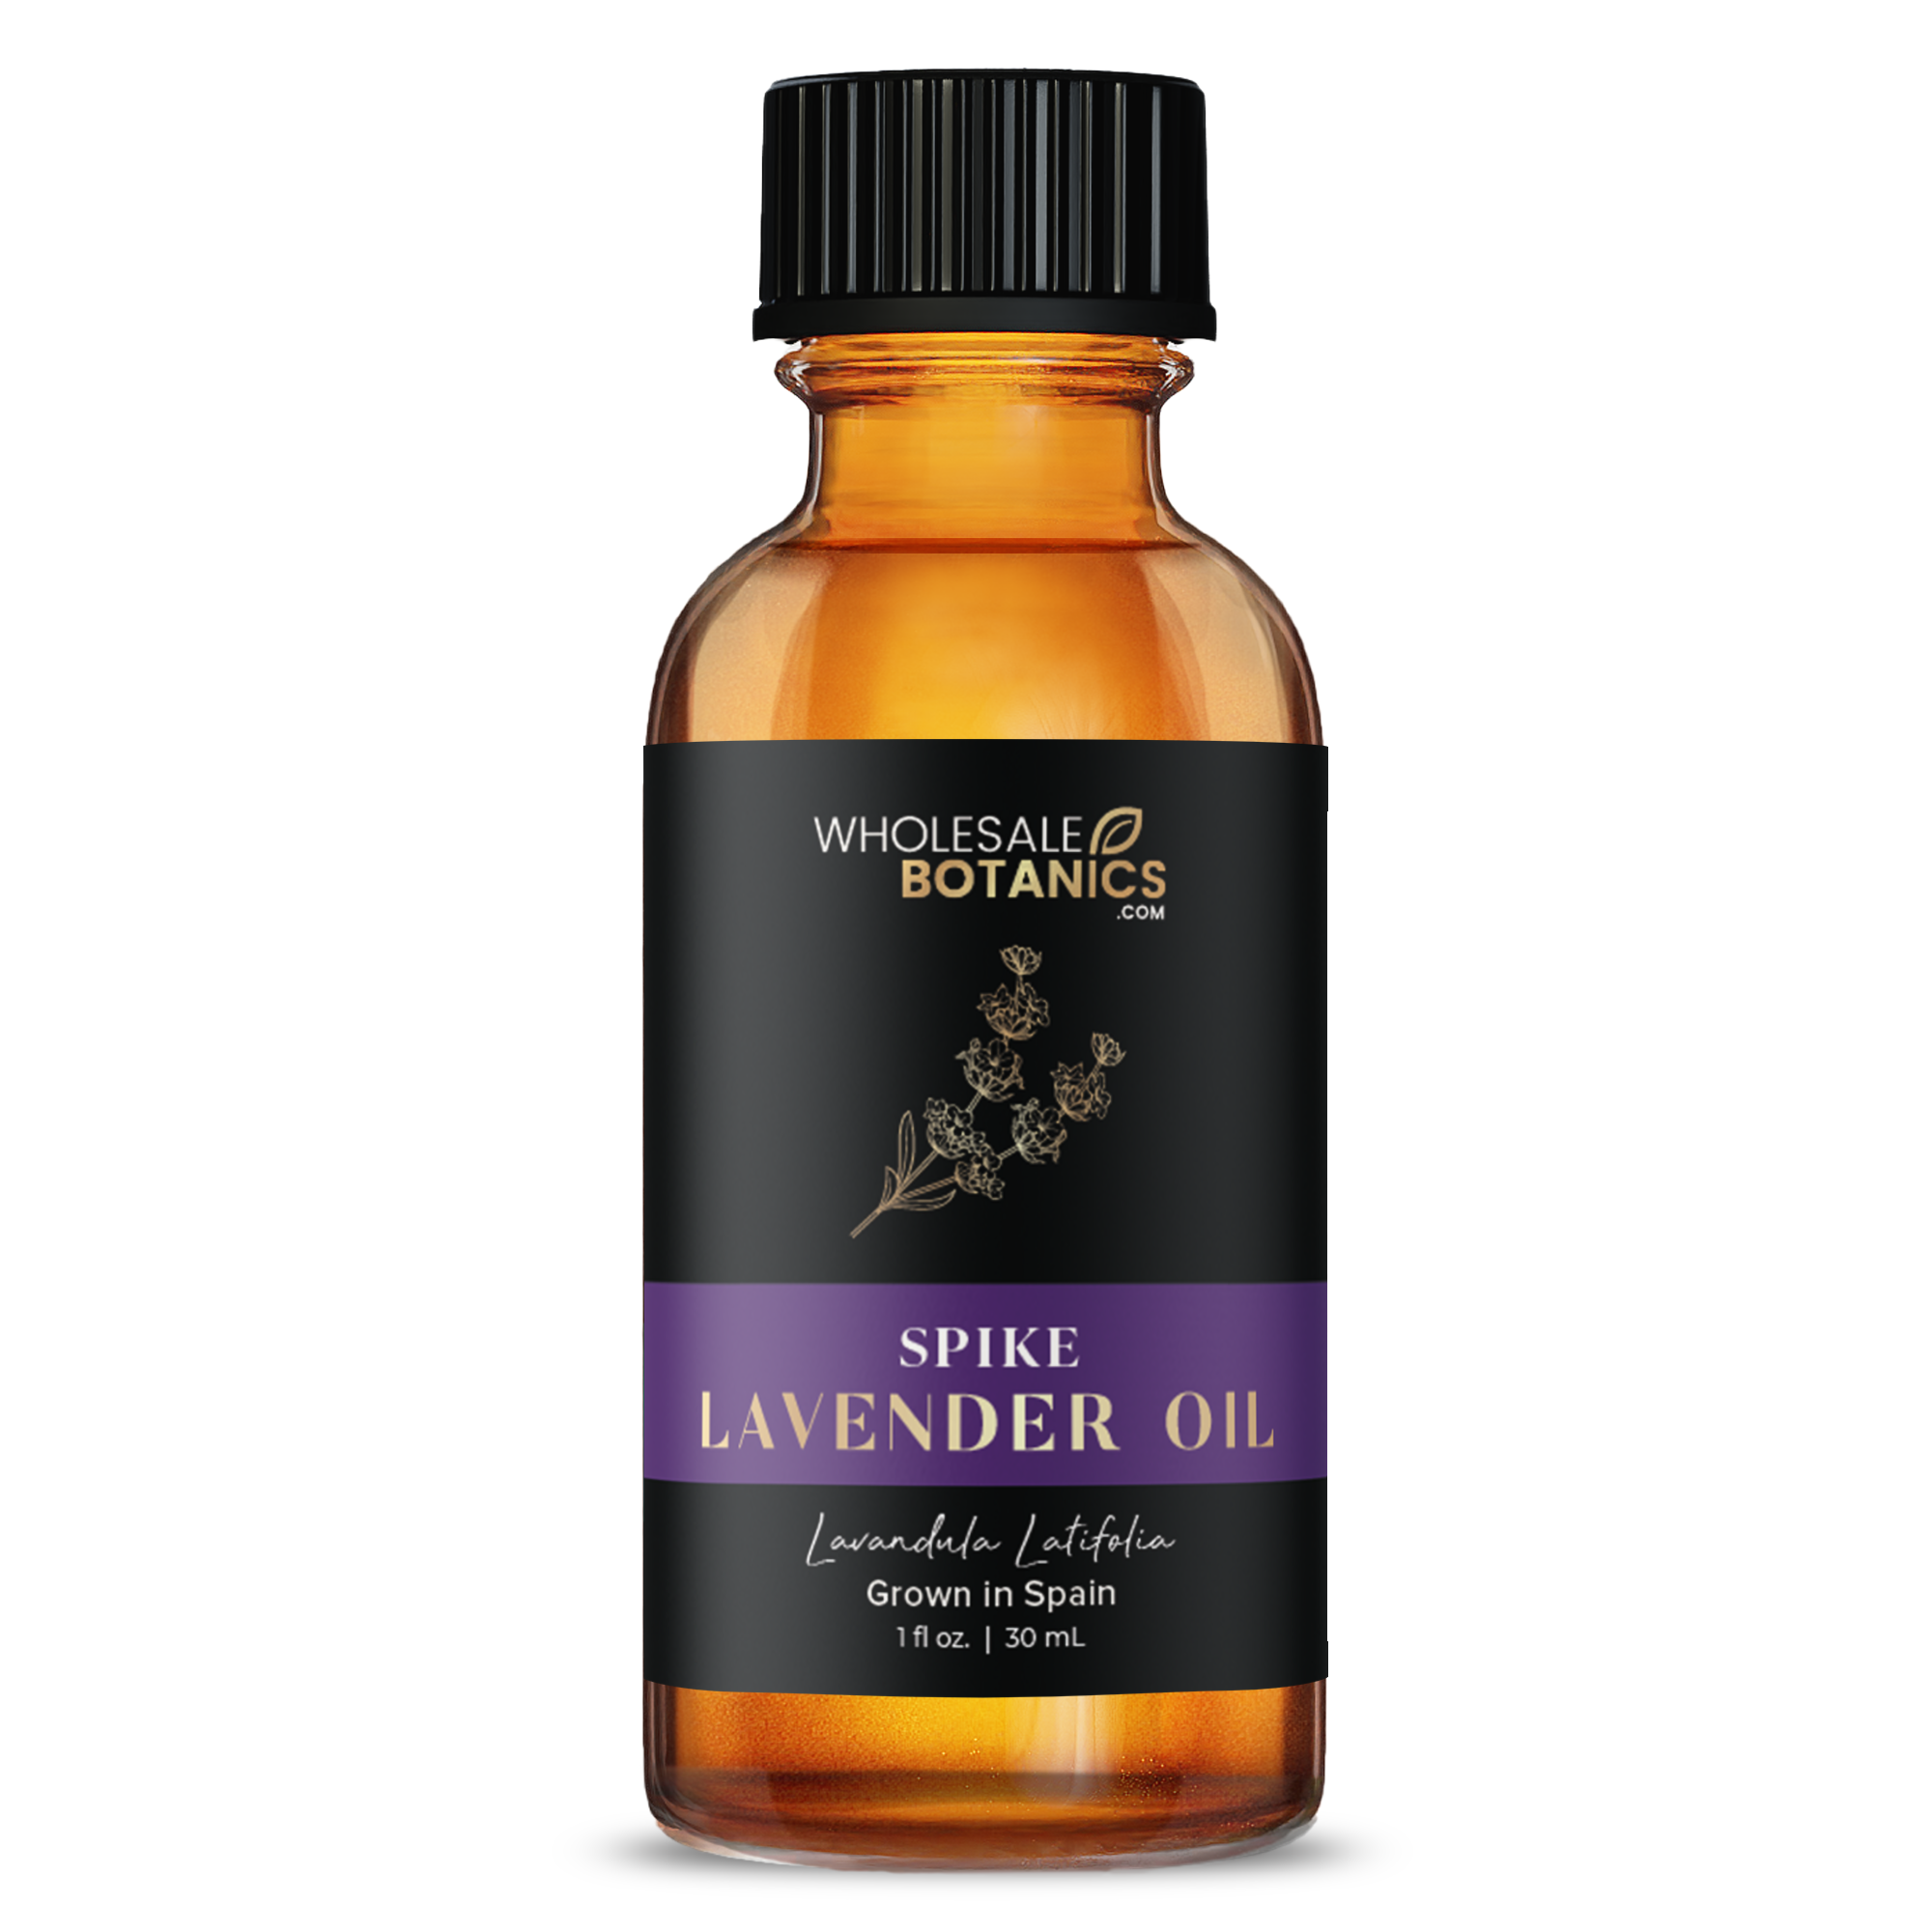 Spike Lavender Oil - Lavandula Latifolia - Spain